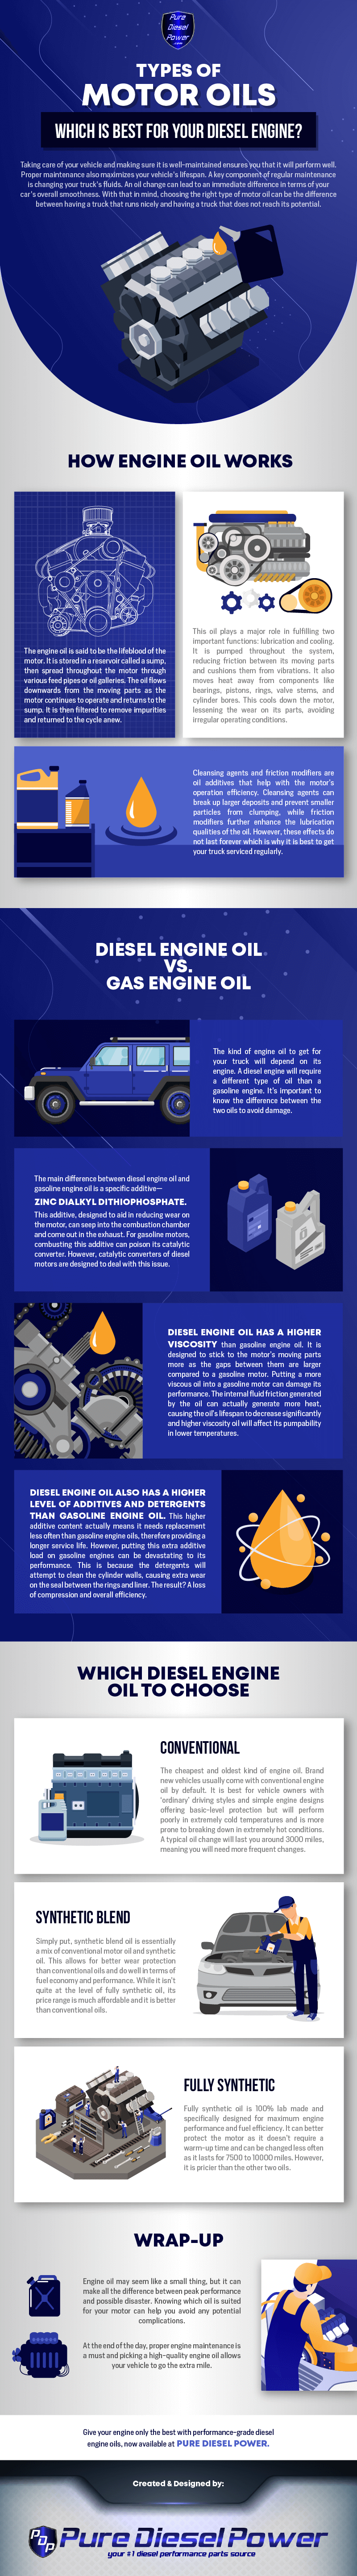 Types of Motor Oils